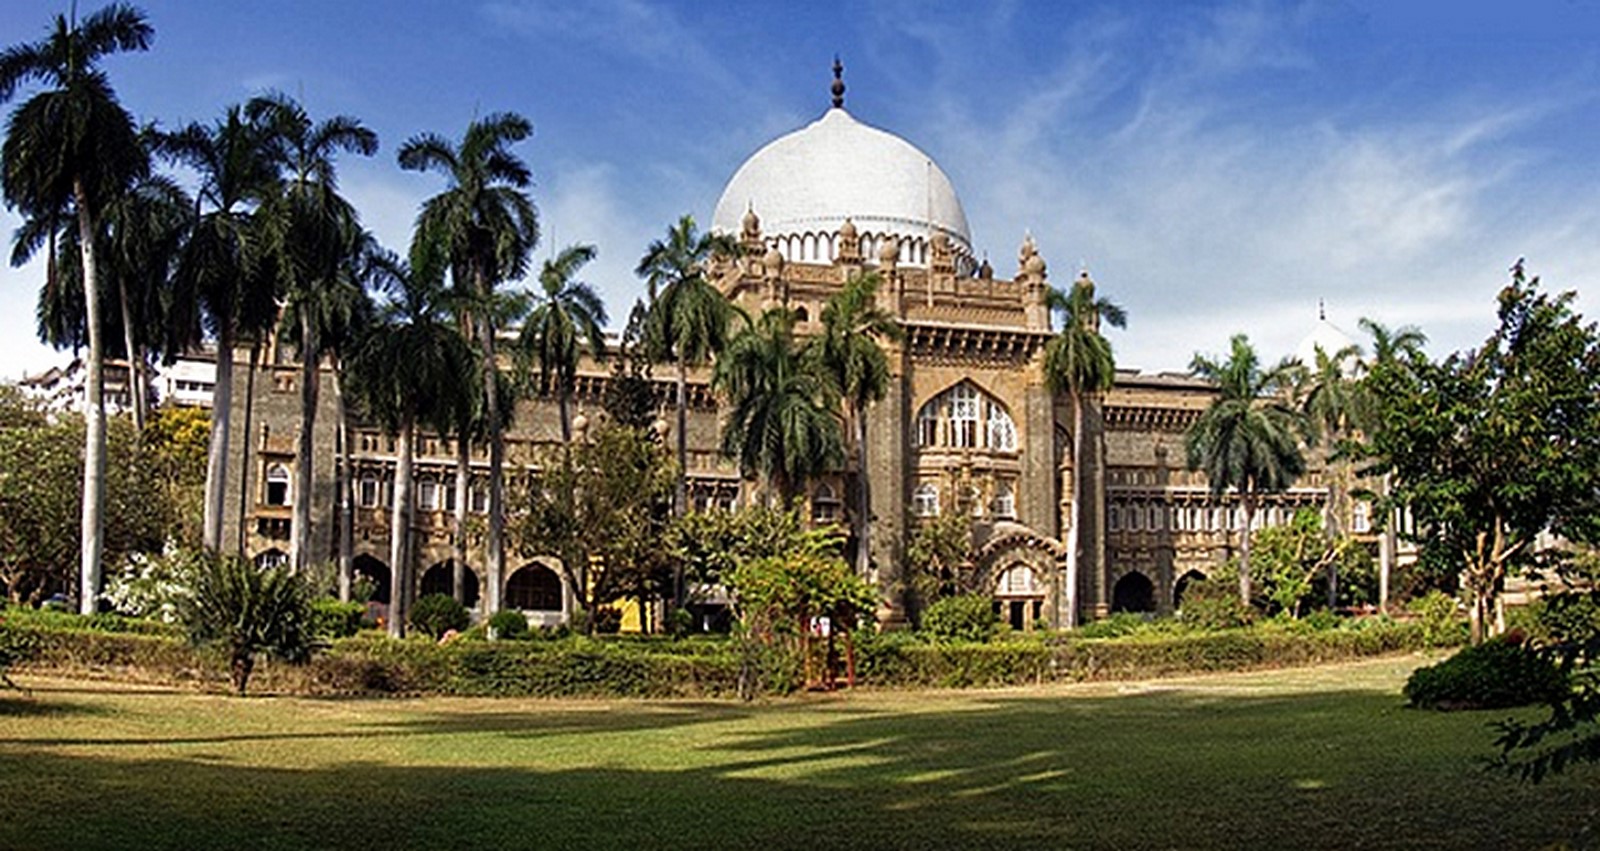 Architectural heritage of Maharashtra - Sheet20